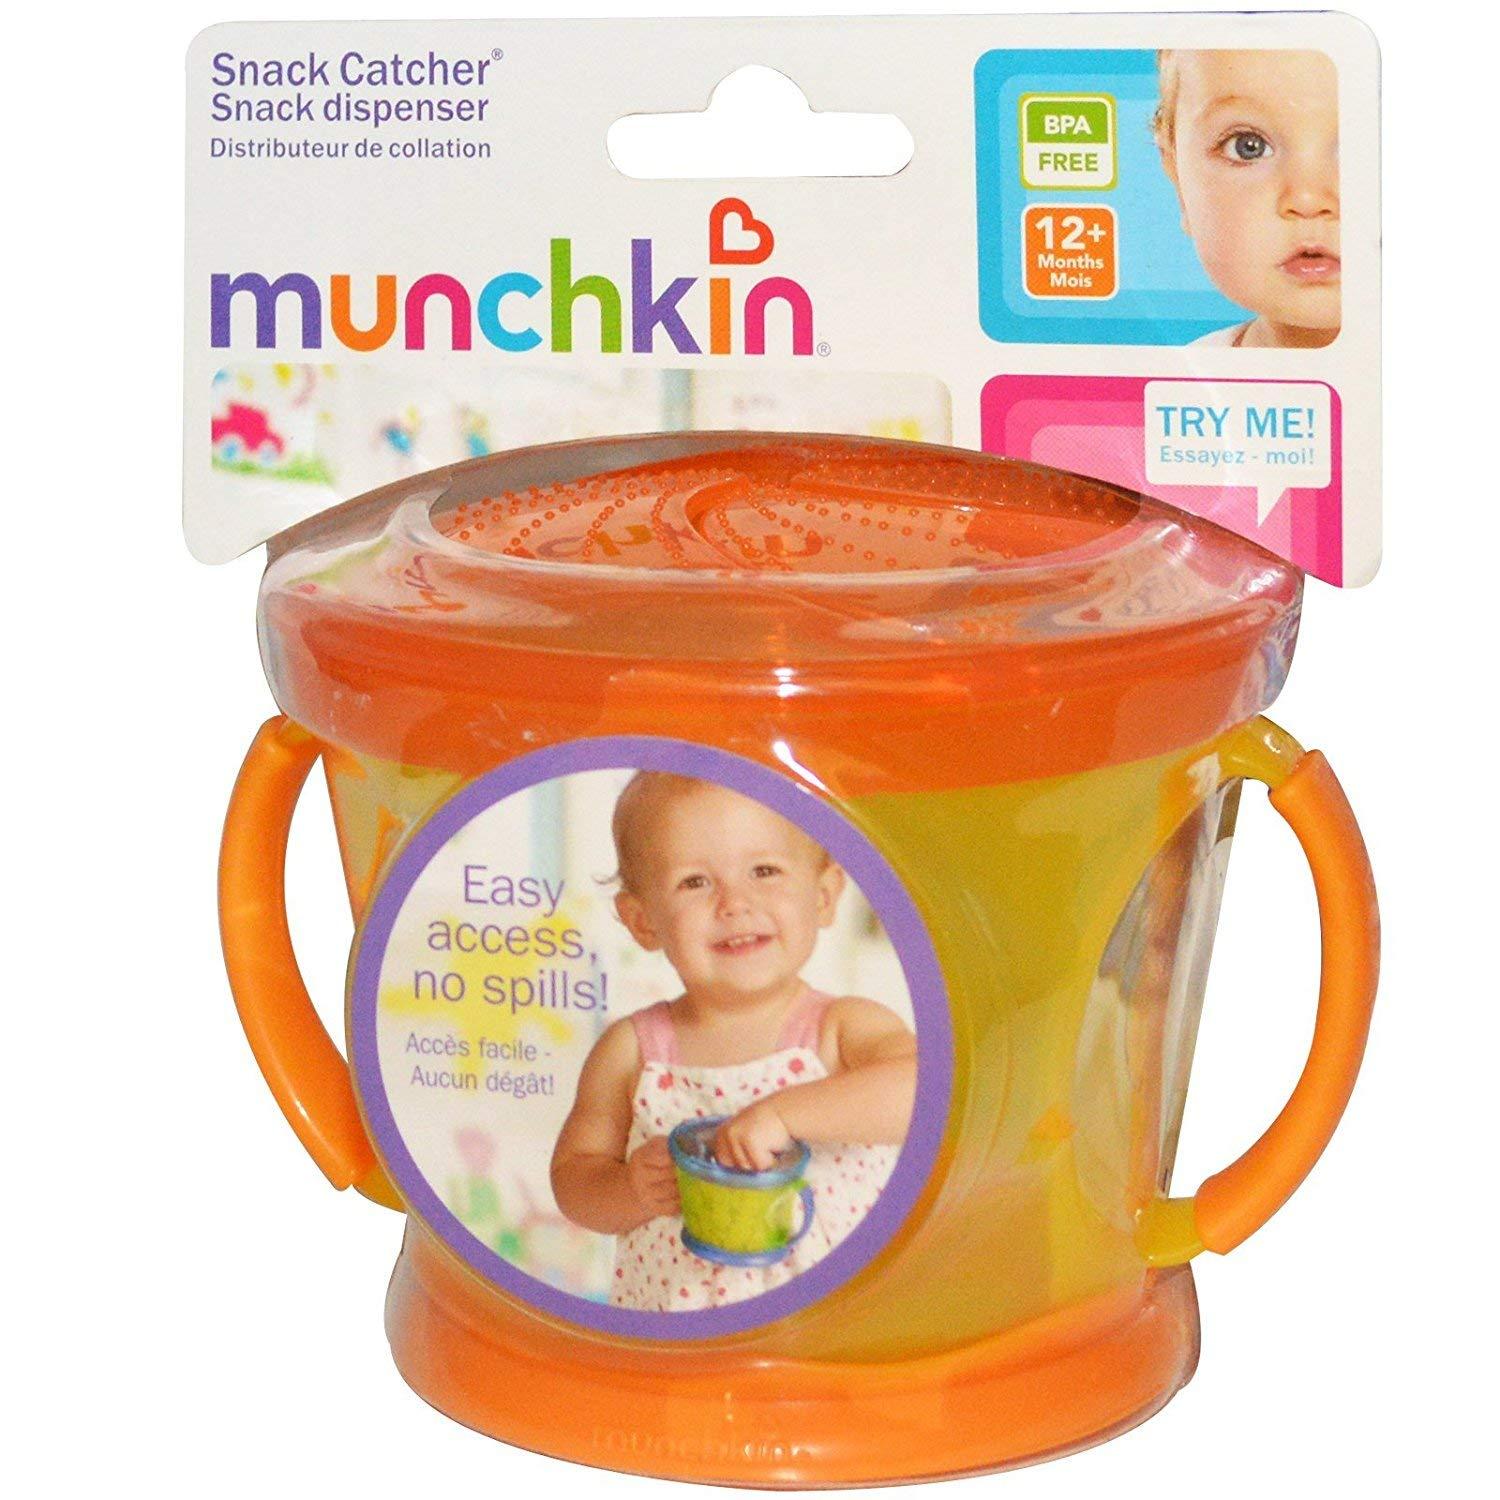 Munchkin 10121 Snack Catcher Assorted Colors